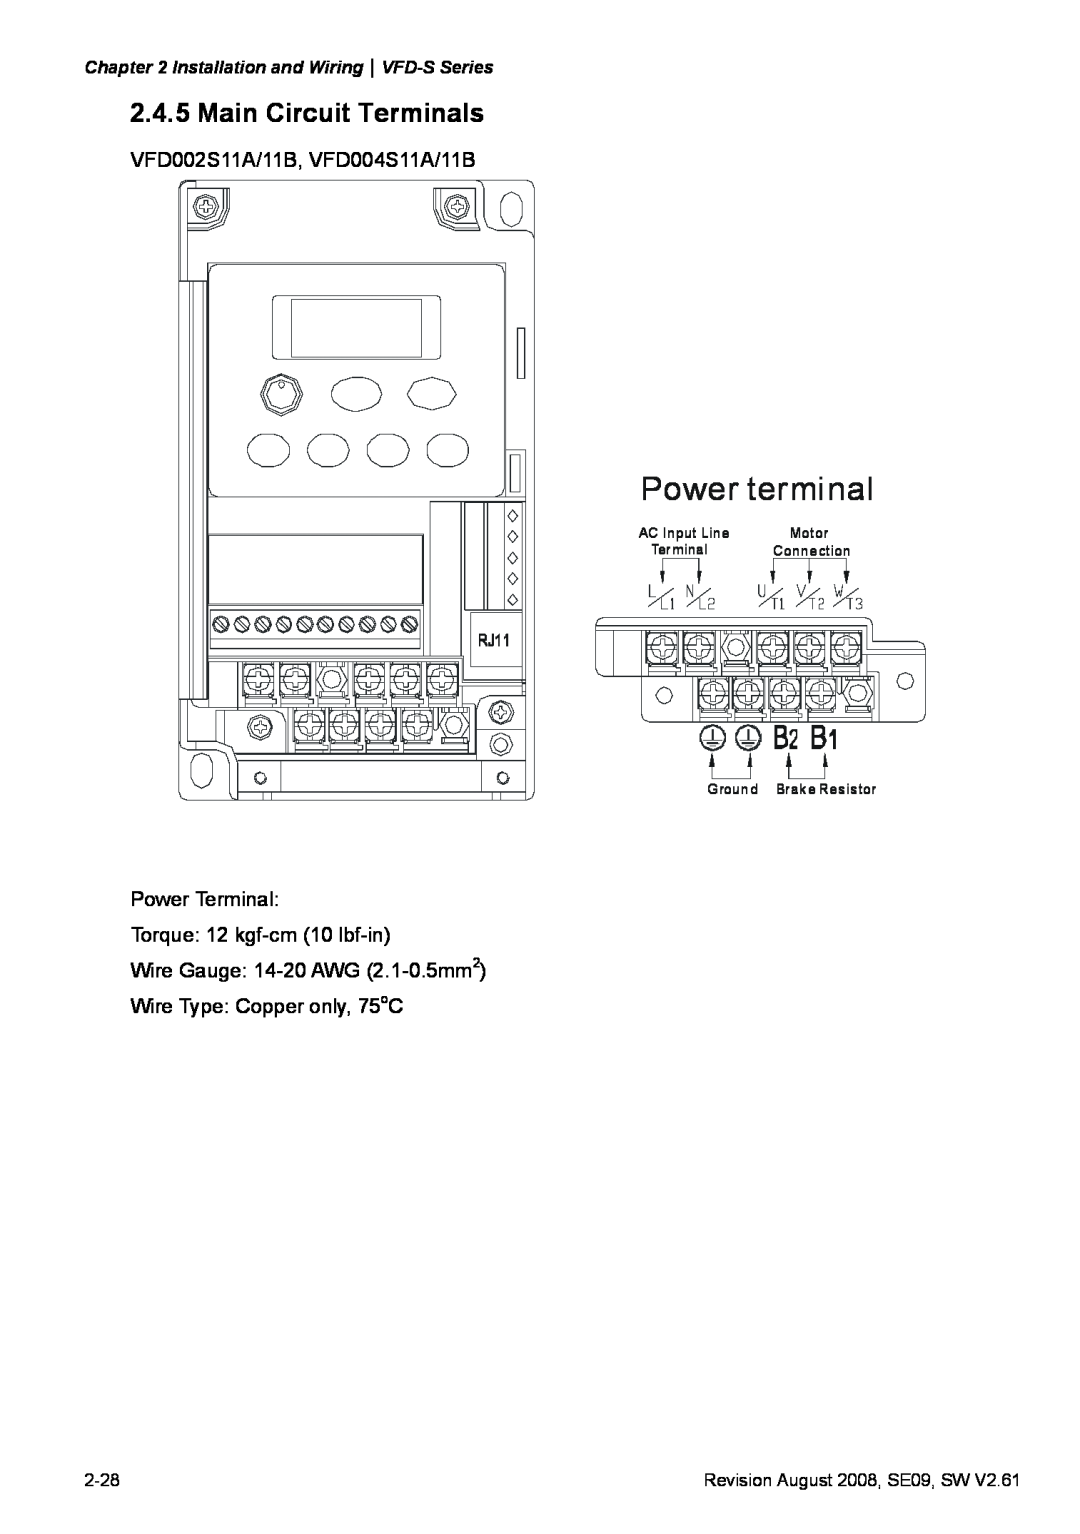 Delta Electronics Power terminal, Main Circuit Terminals, Installation and WiringVFD-S Series, 2-28, AC Input Line 